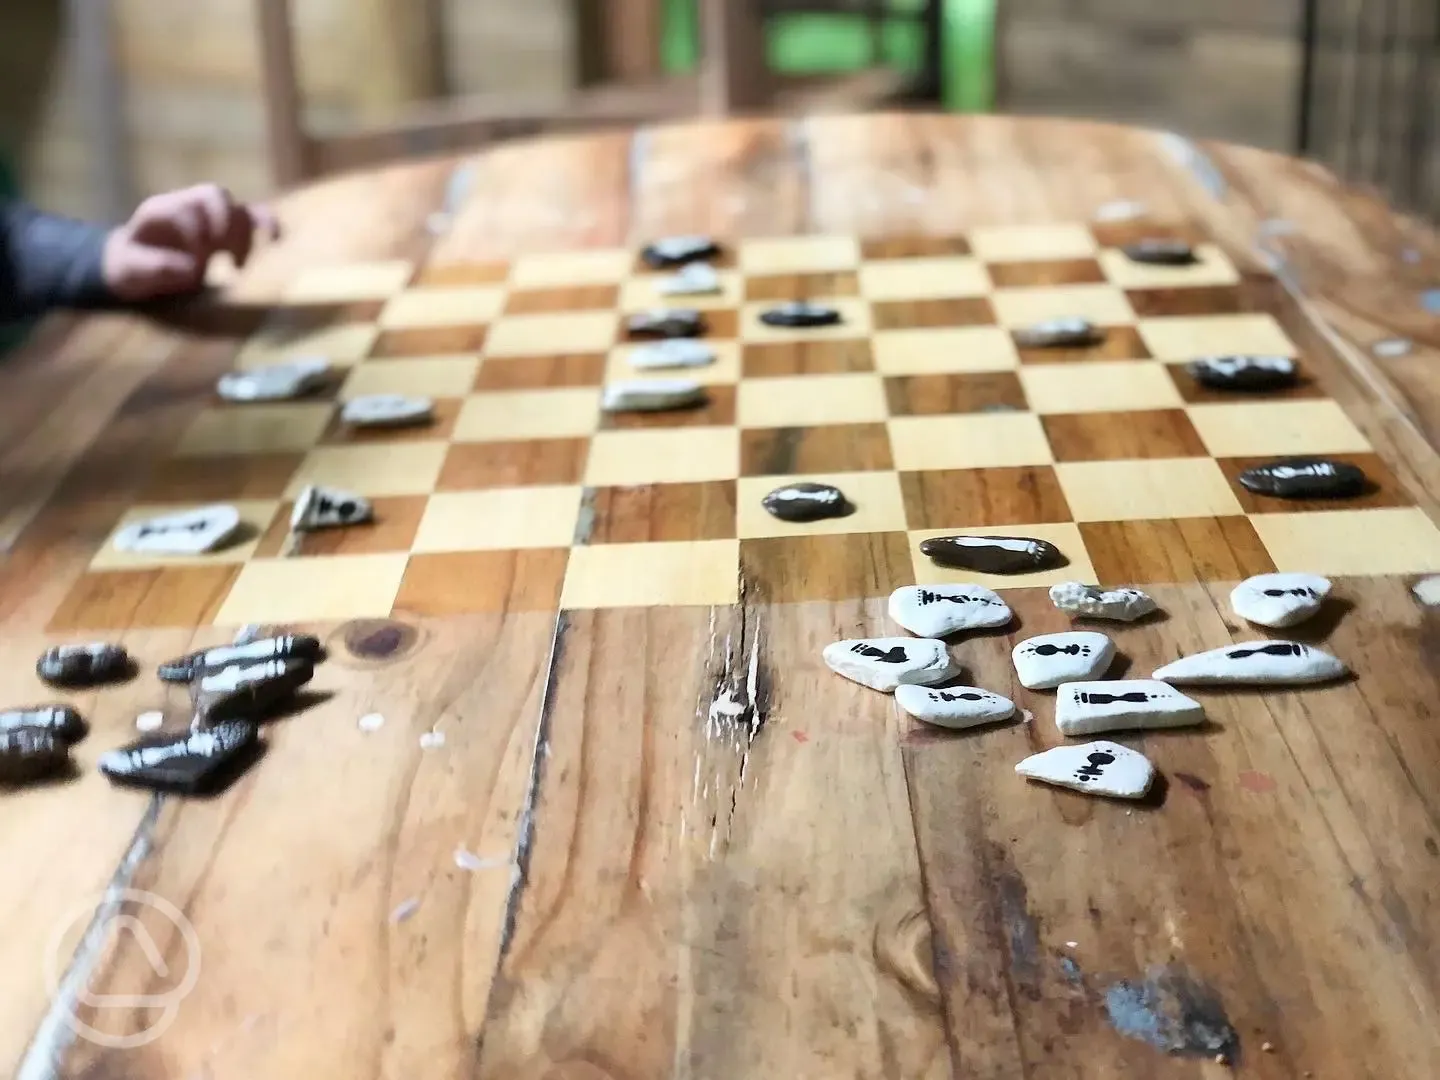 Chess table at Steves Shack